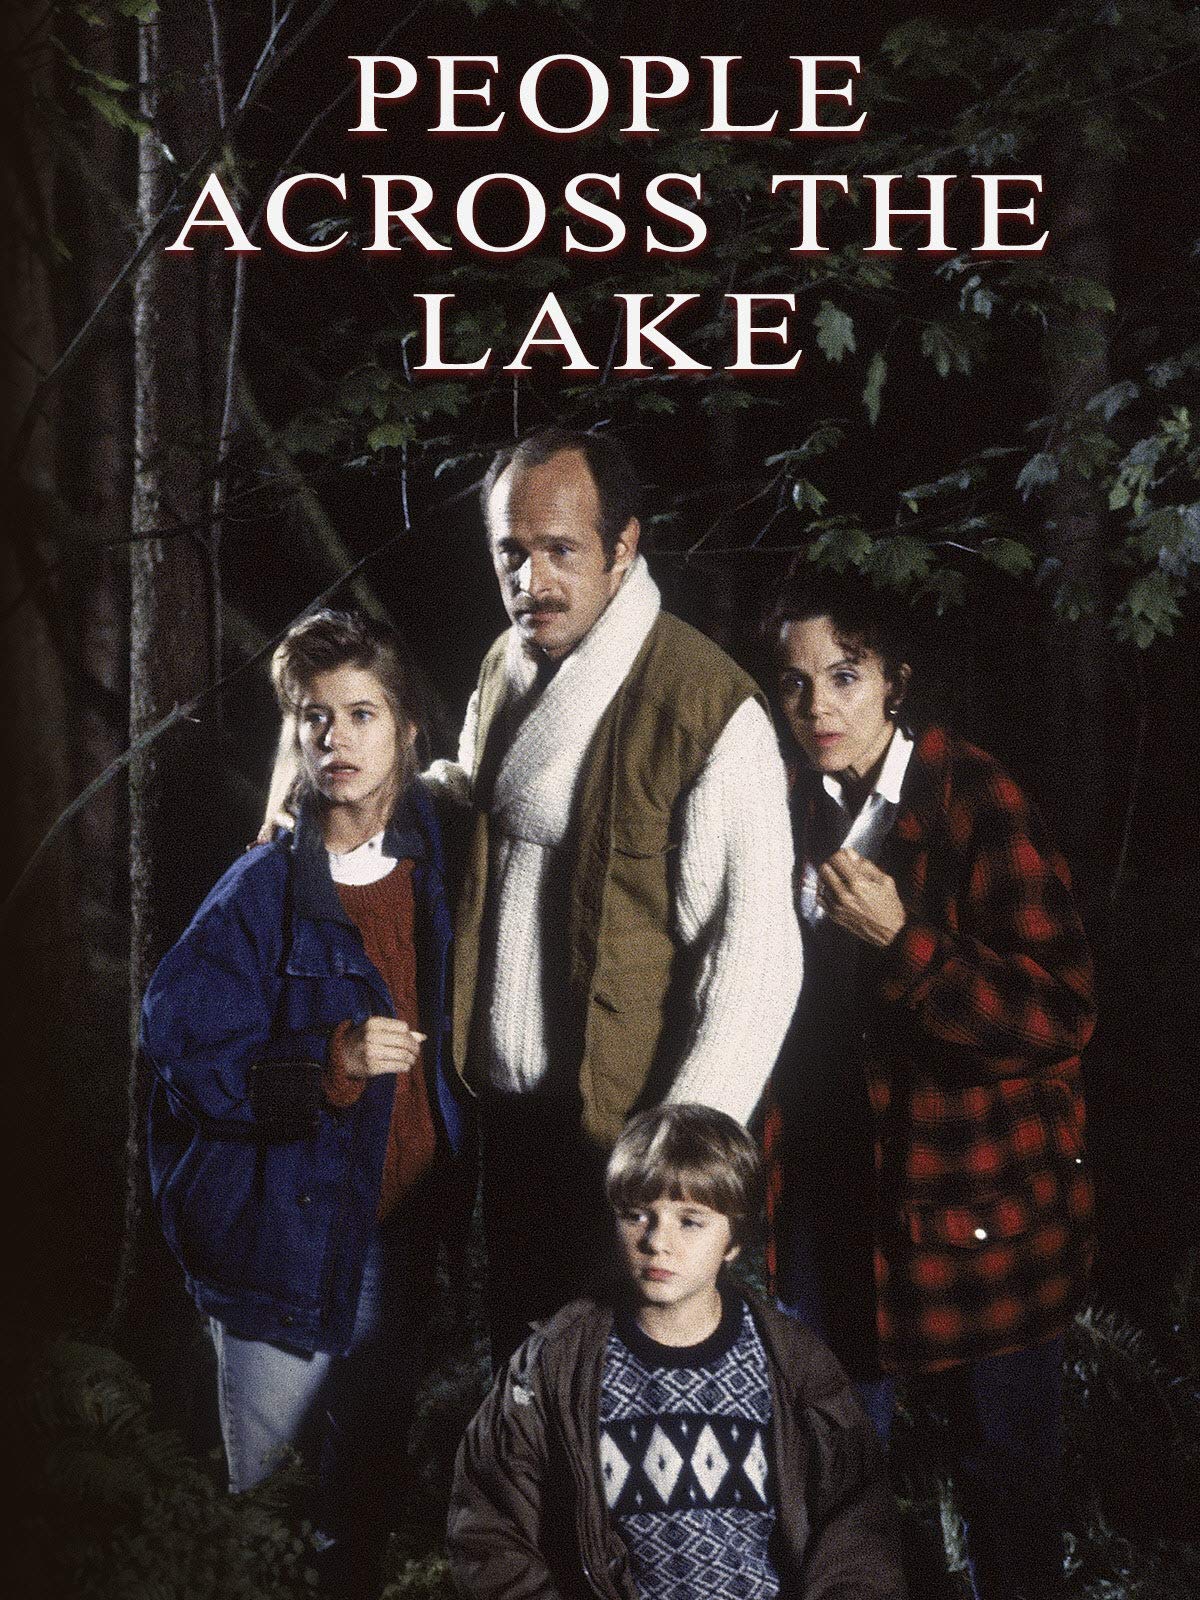 The People Across the Lake (1988) Screenshot 3 